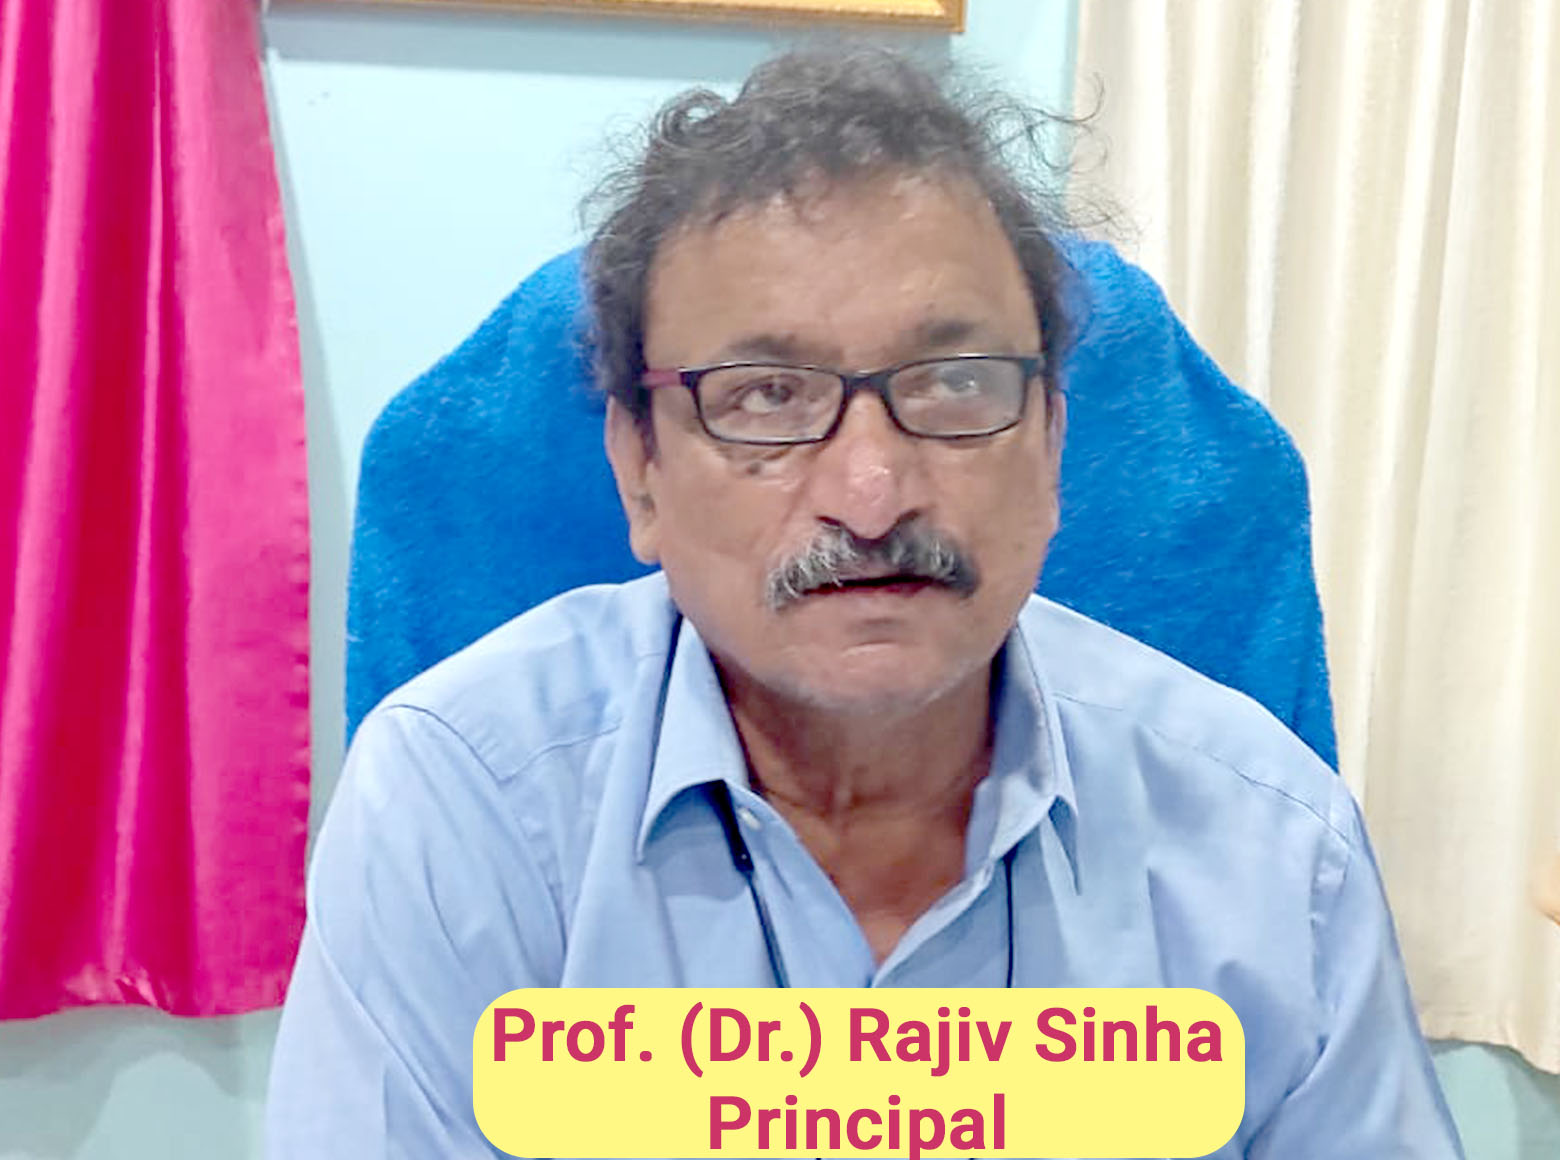 Prof. Rajiv Sinha